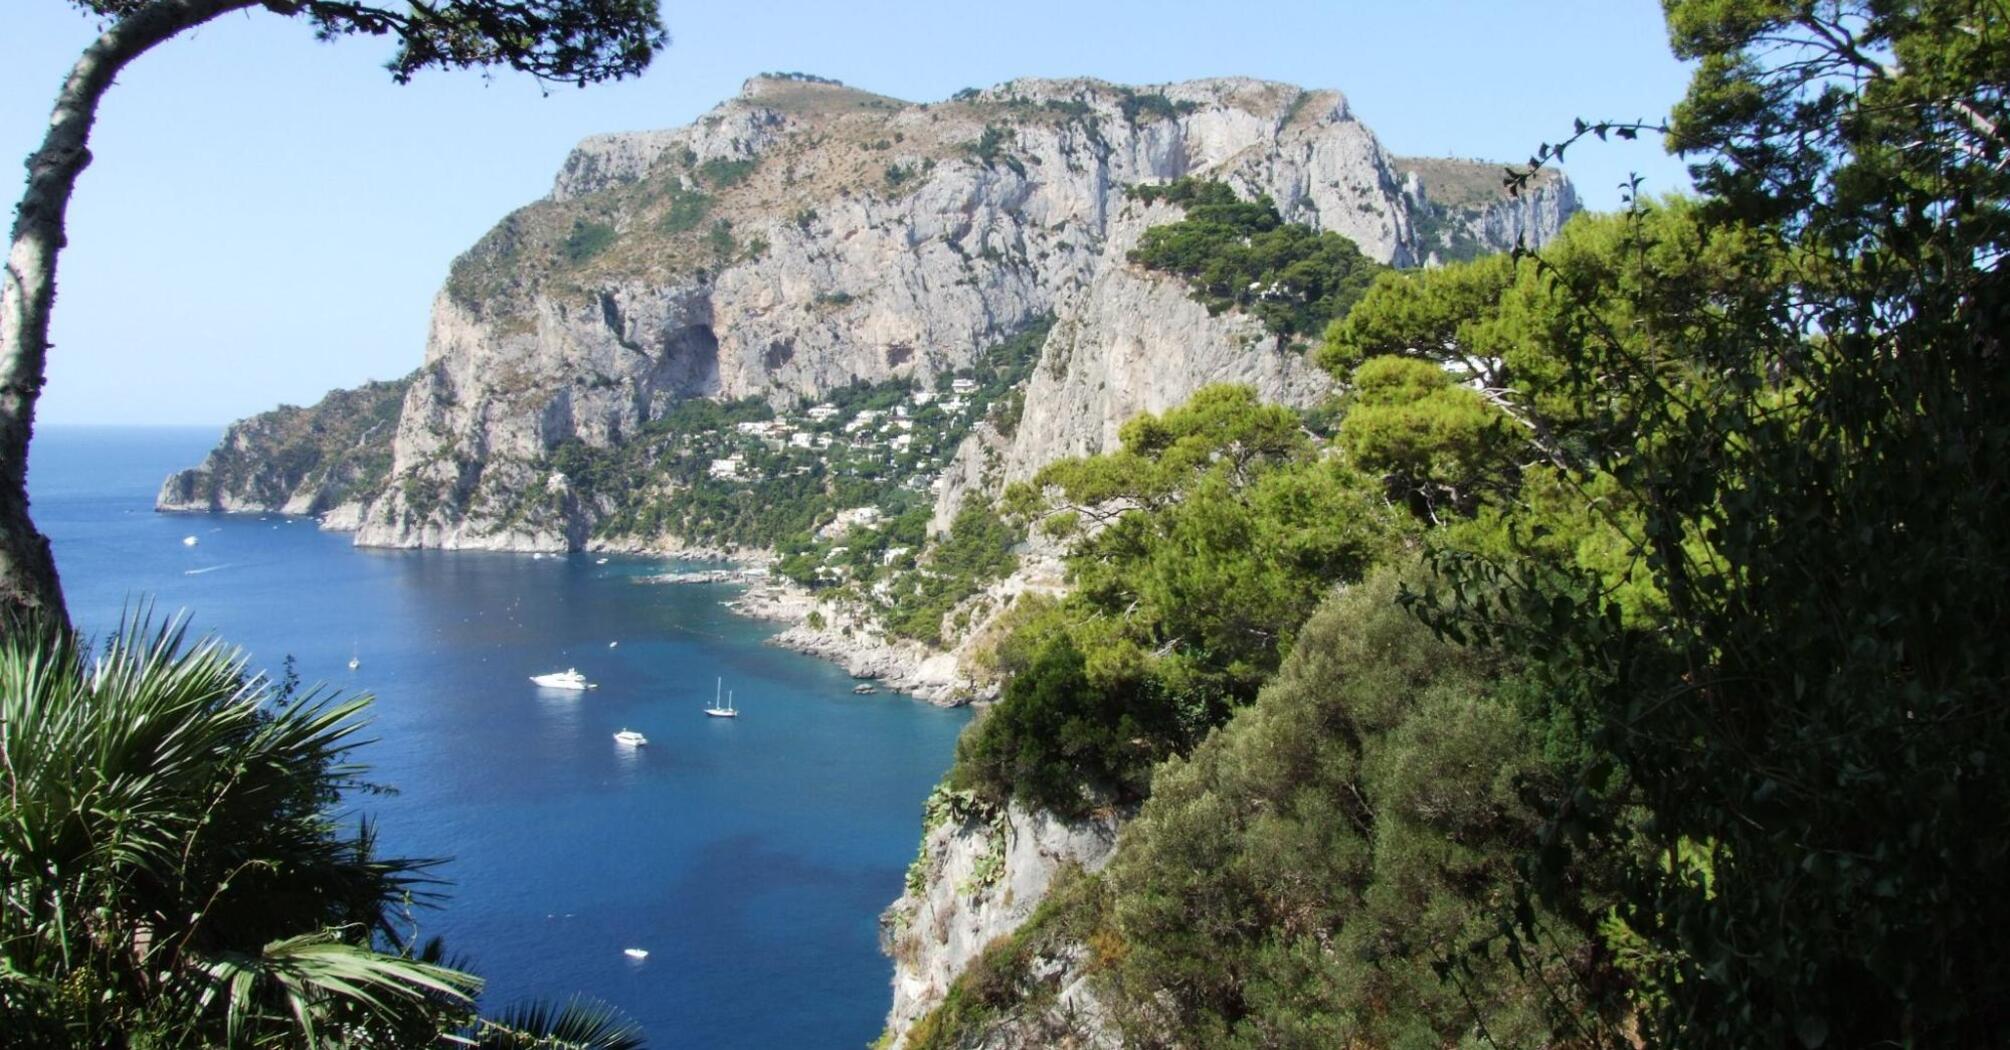 Amalfi coast landscape from the mountain